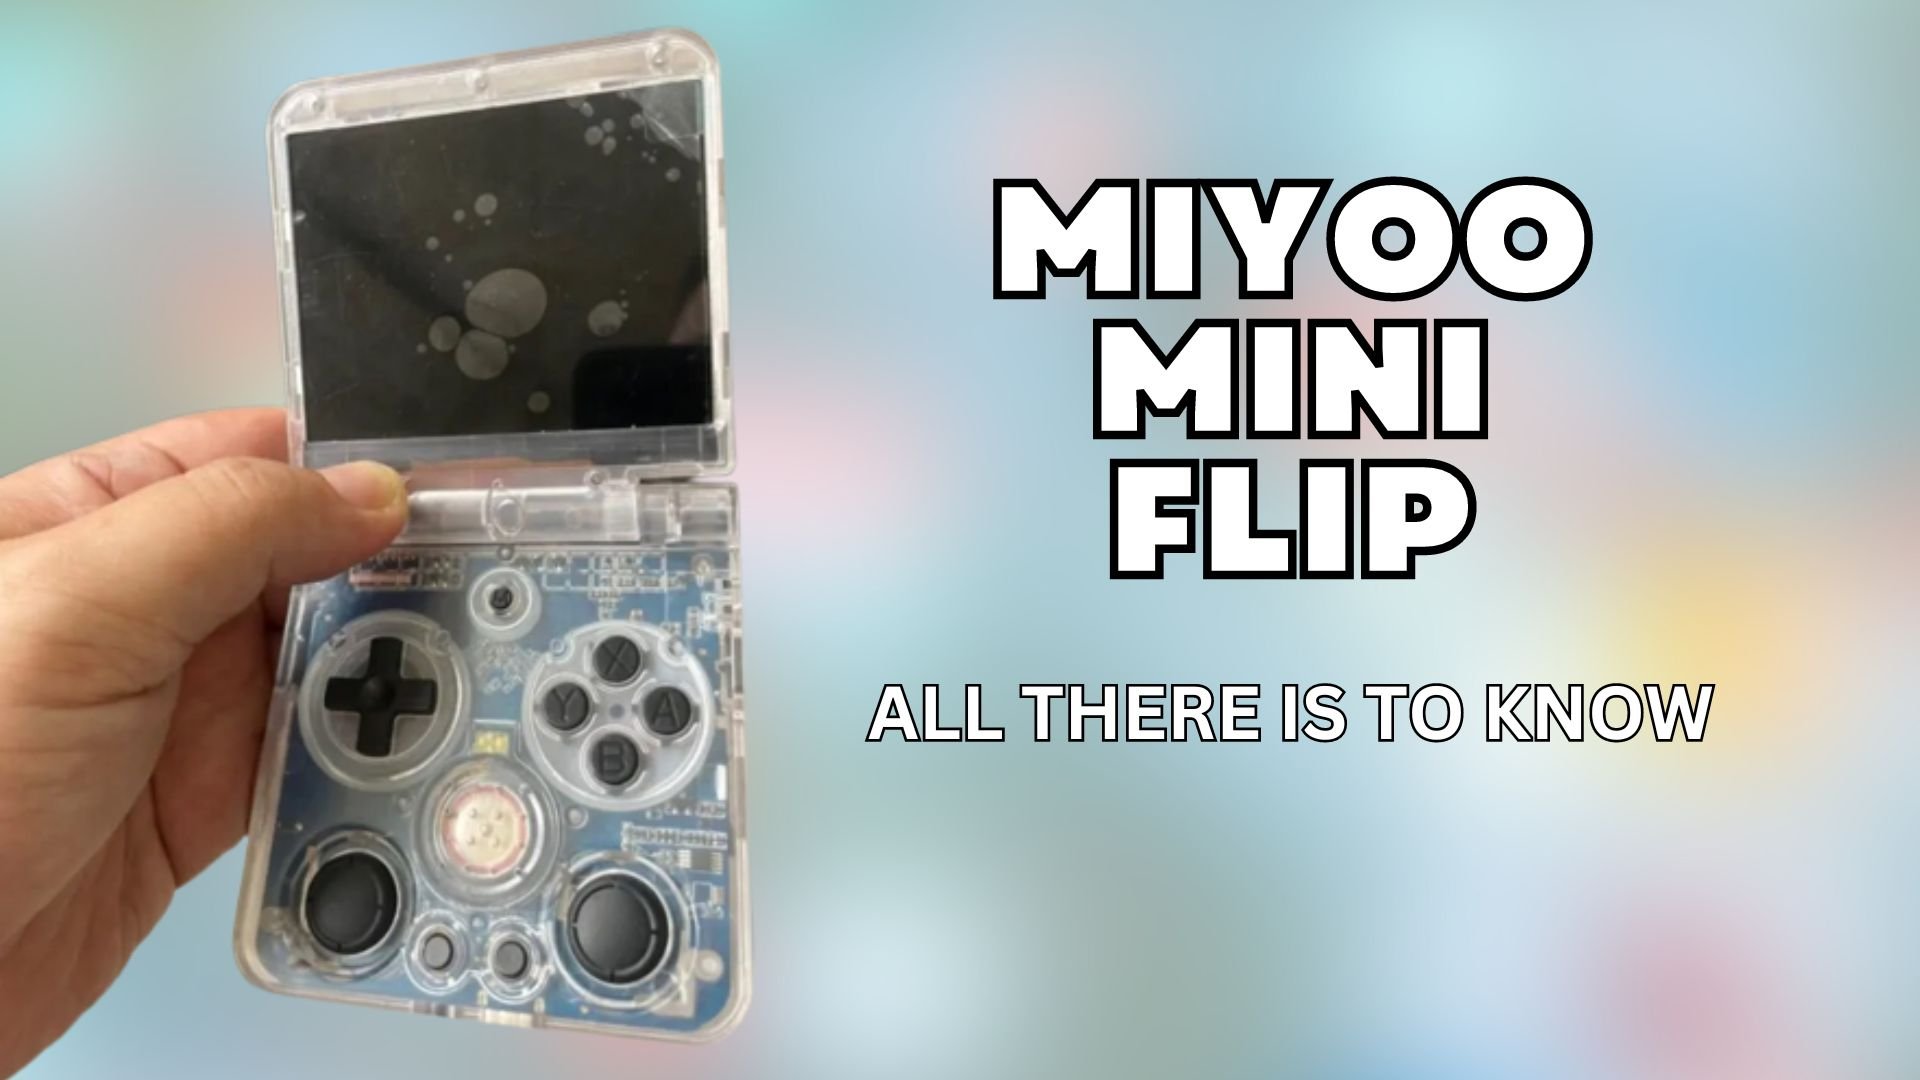 Miyoo Mini Flip – What we know so far